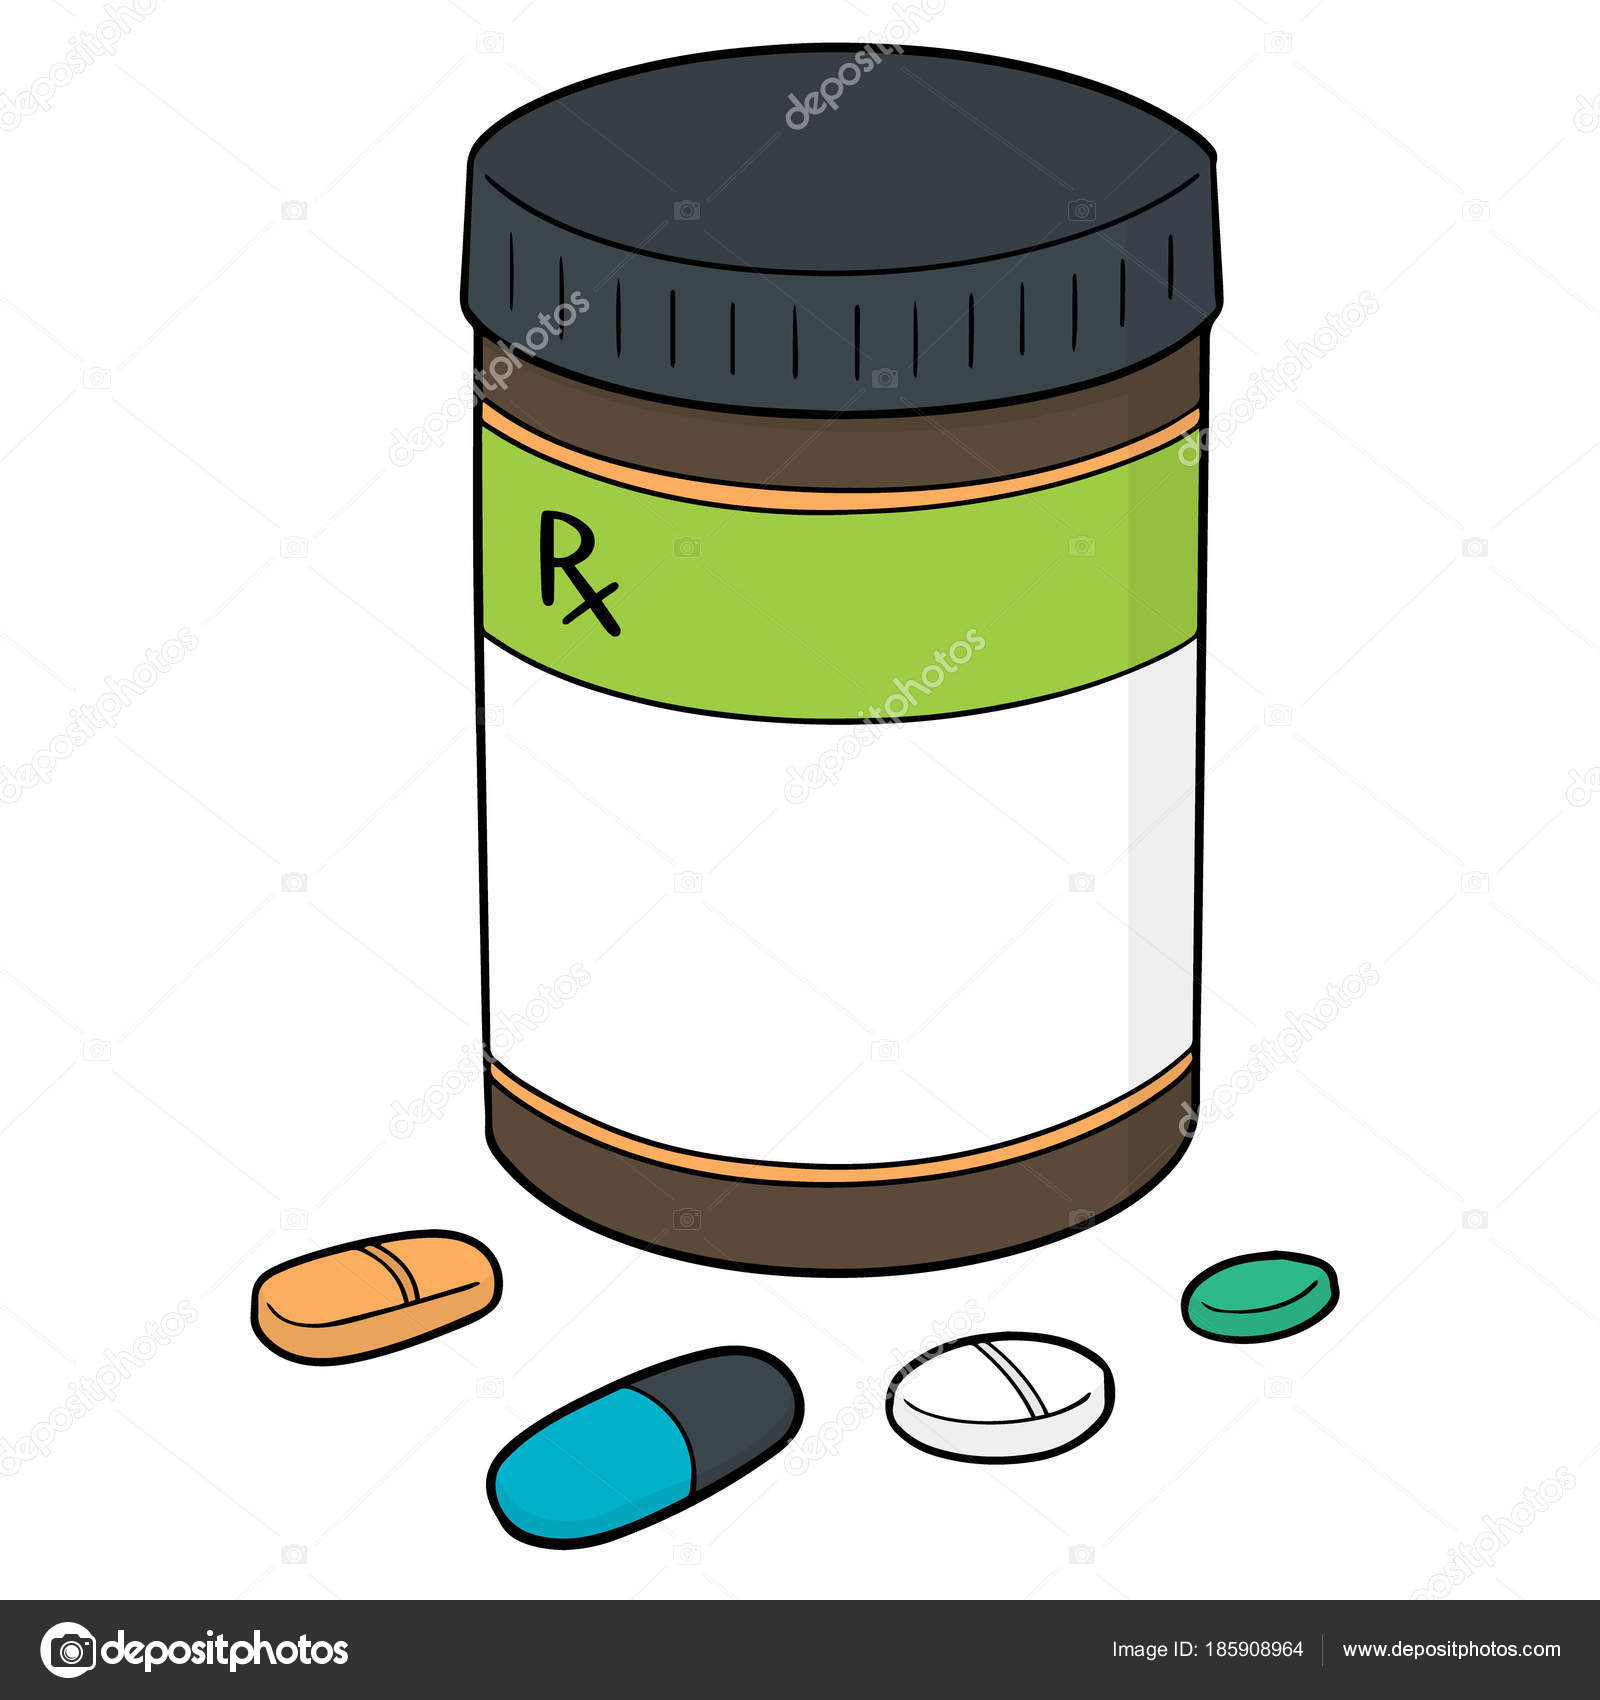 Conjunto de caixa e frasco de medicamentos no fundo azul para